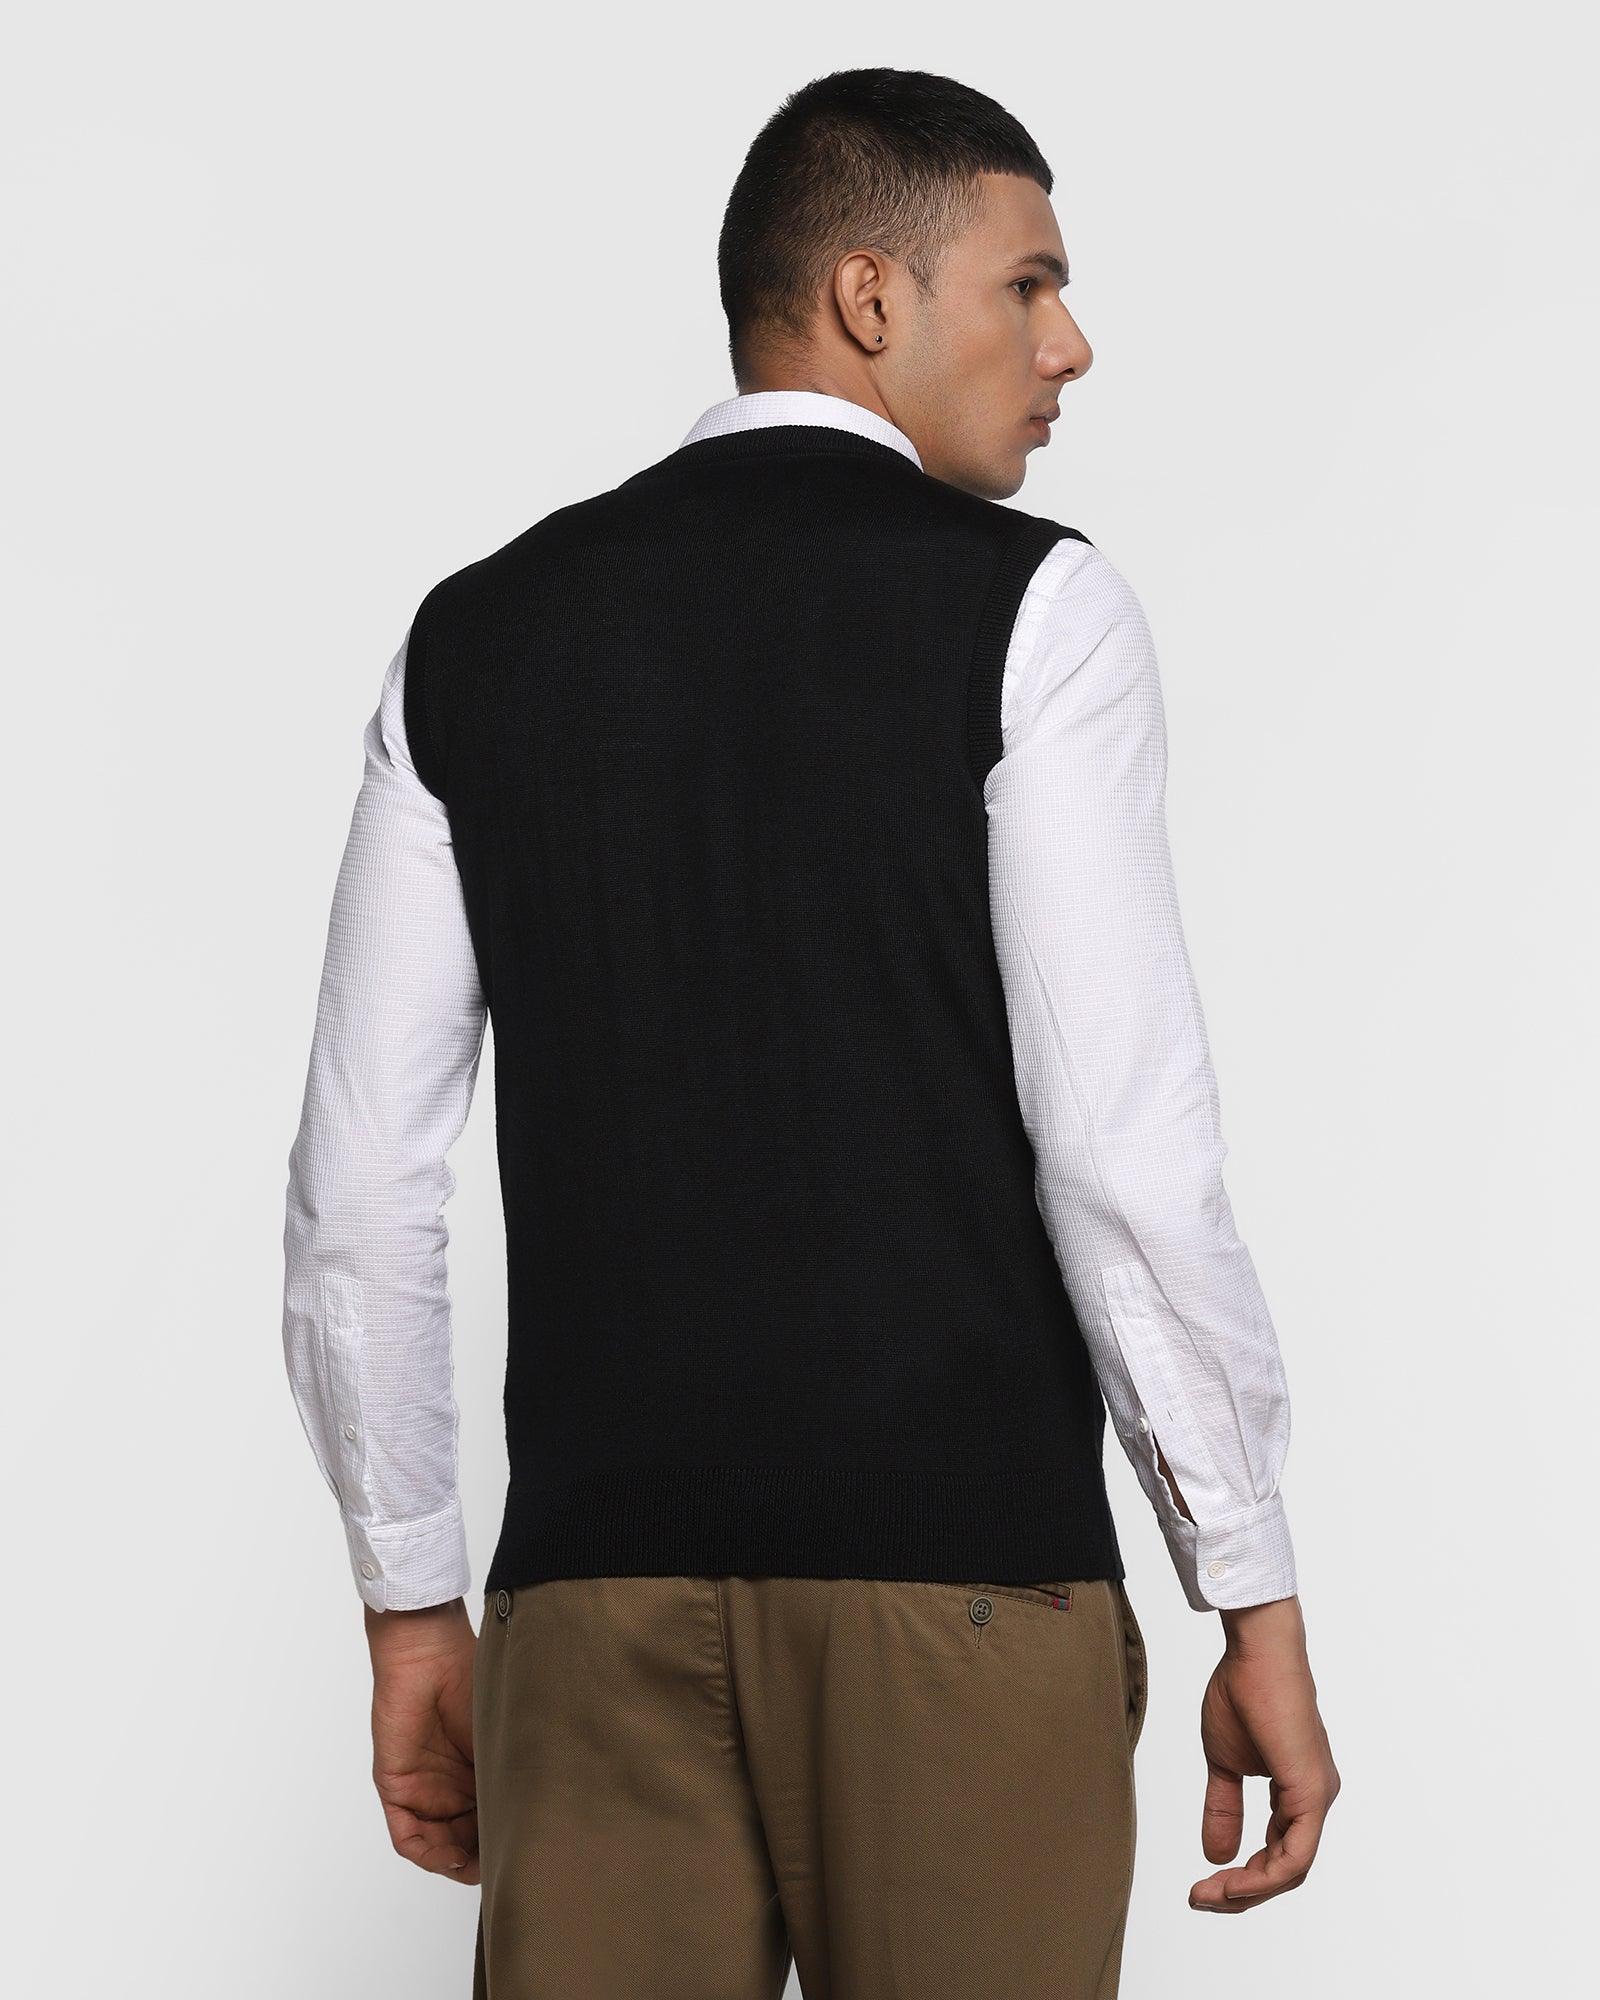 V-Neck Black Solid Sweater - Xavior